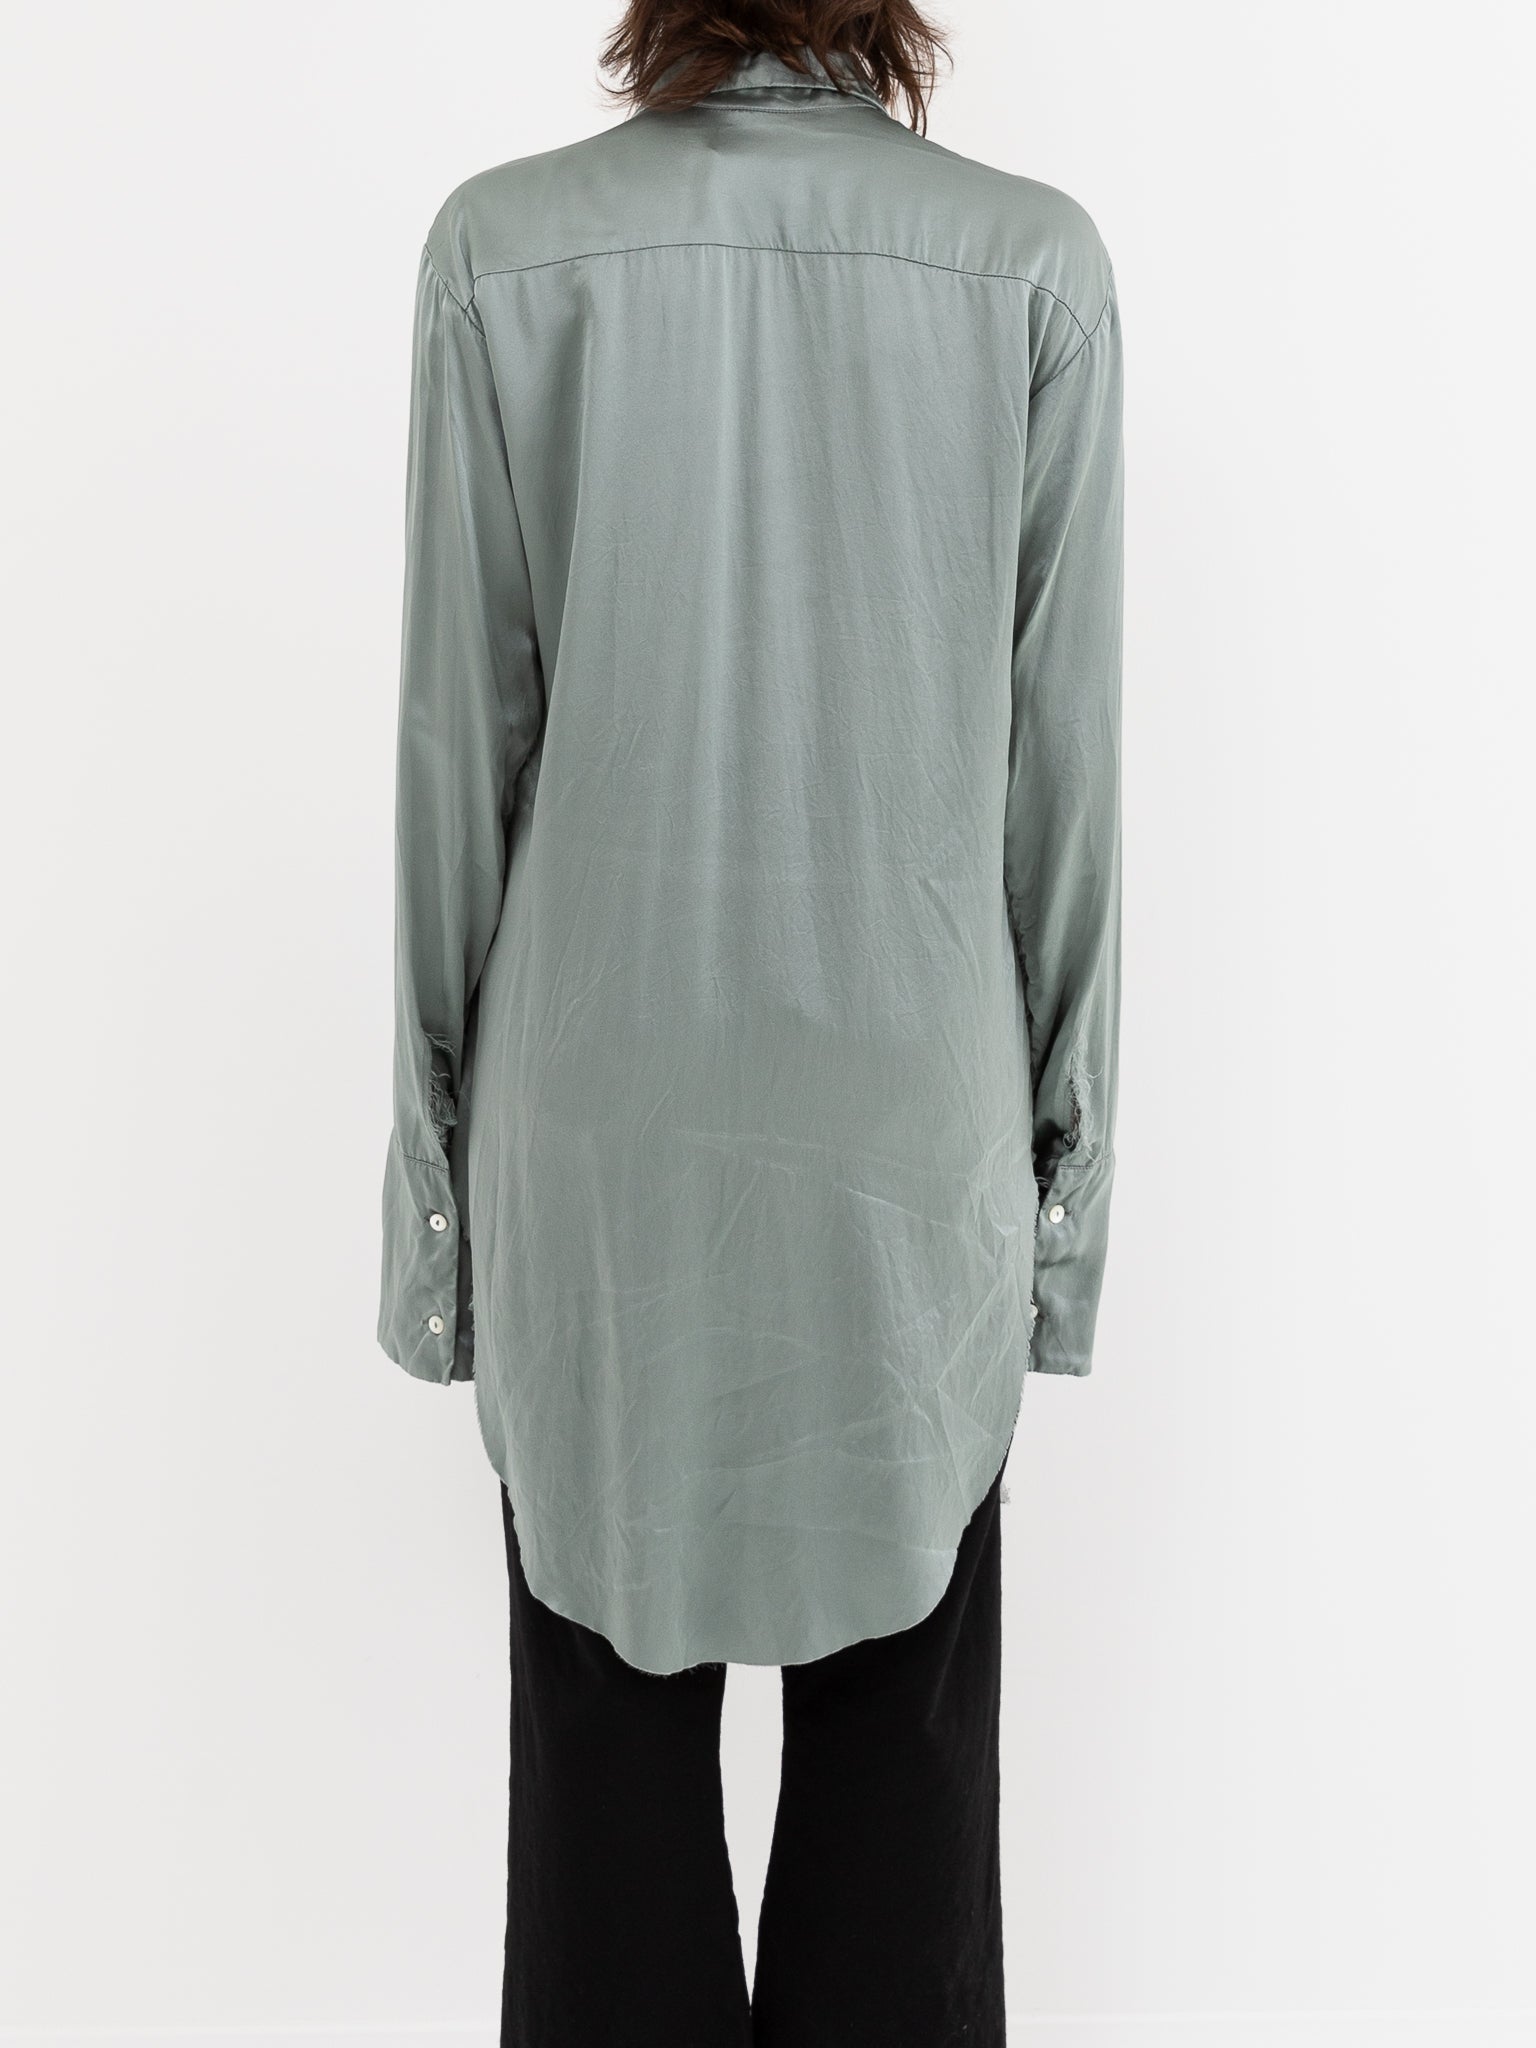 Elena Dawson Long Shirt in Teardrop - Worthwhile, Inc.